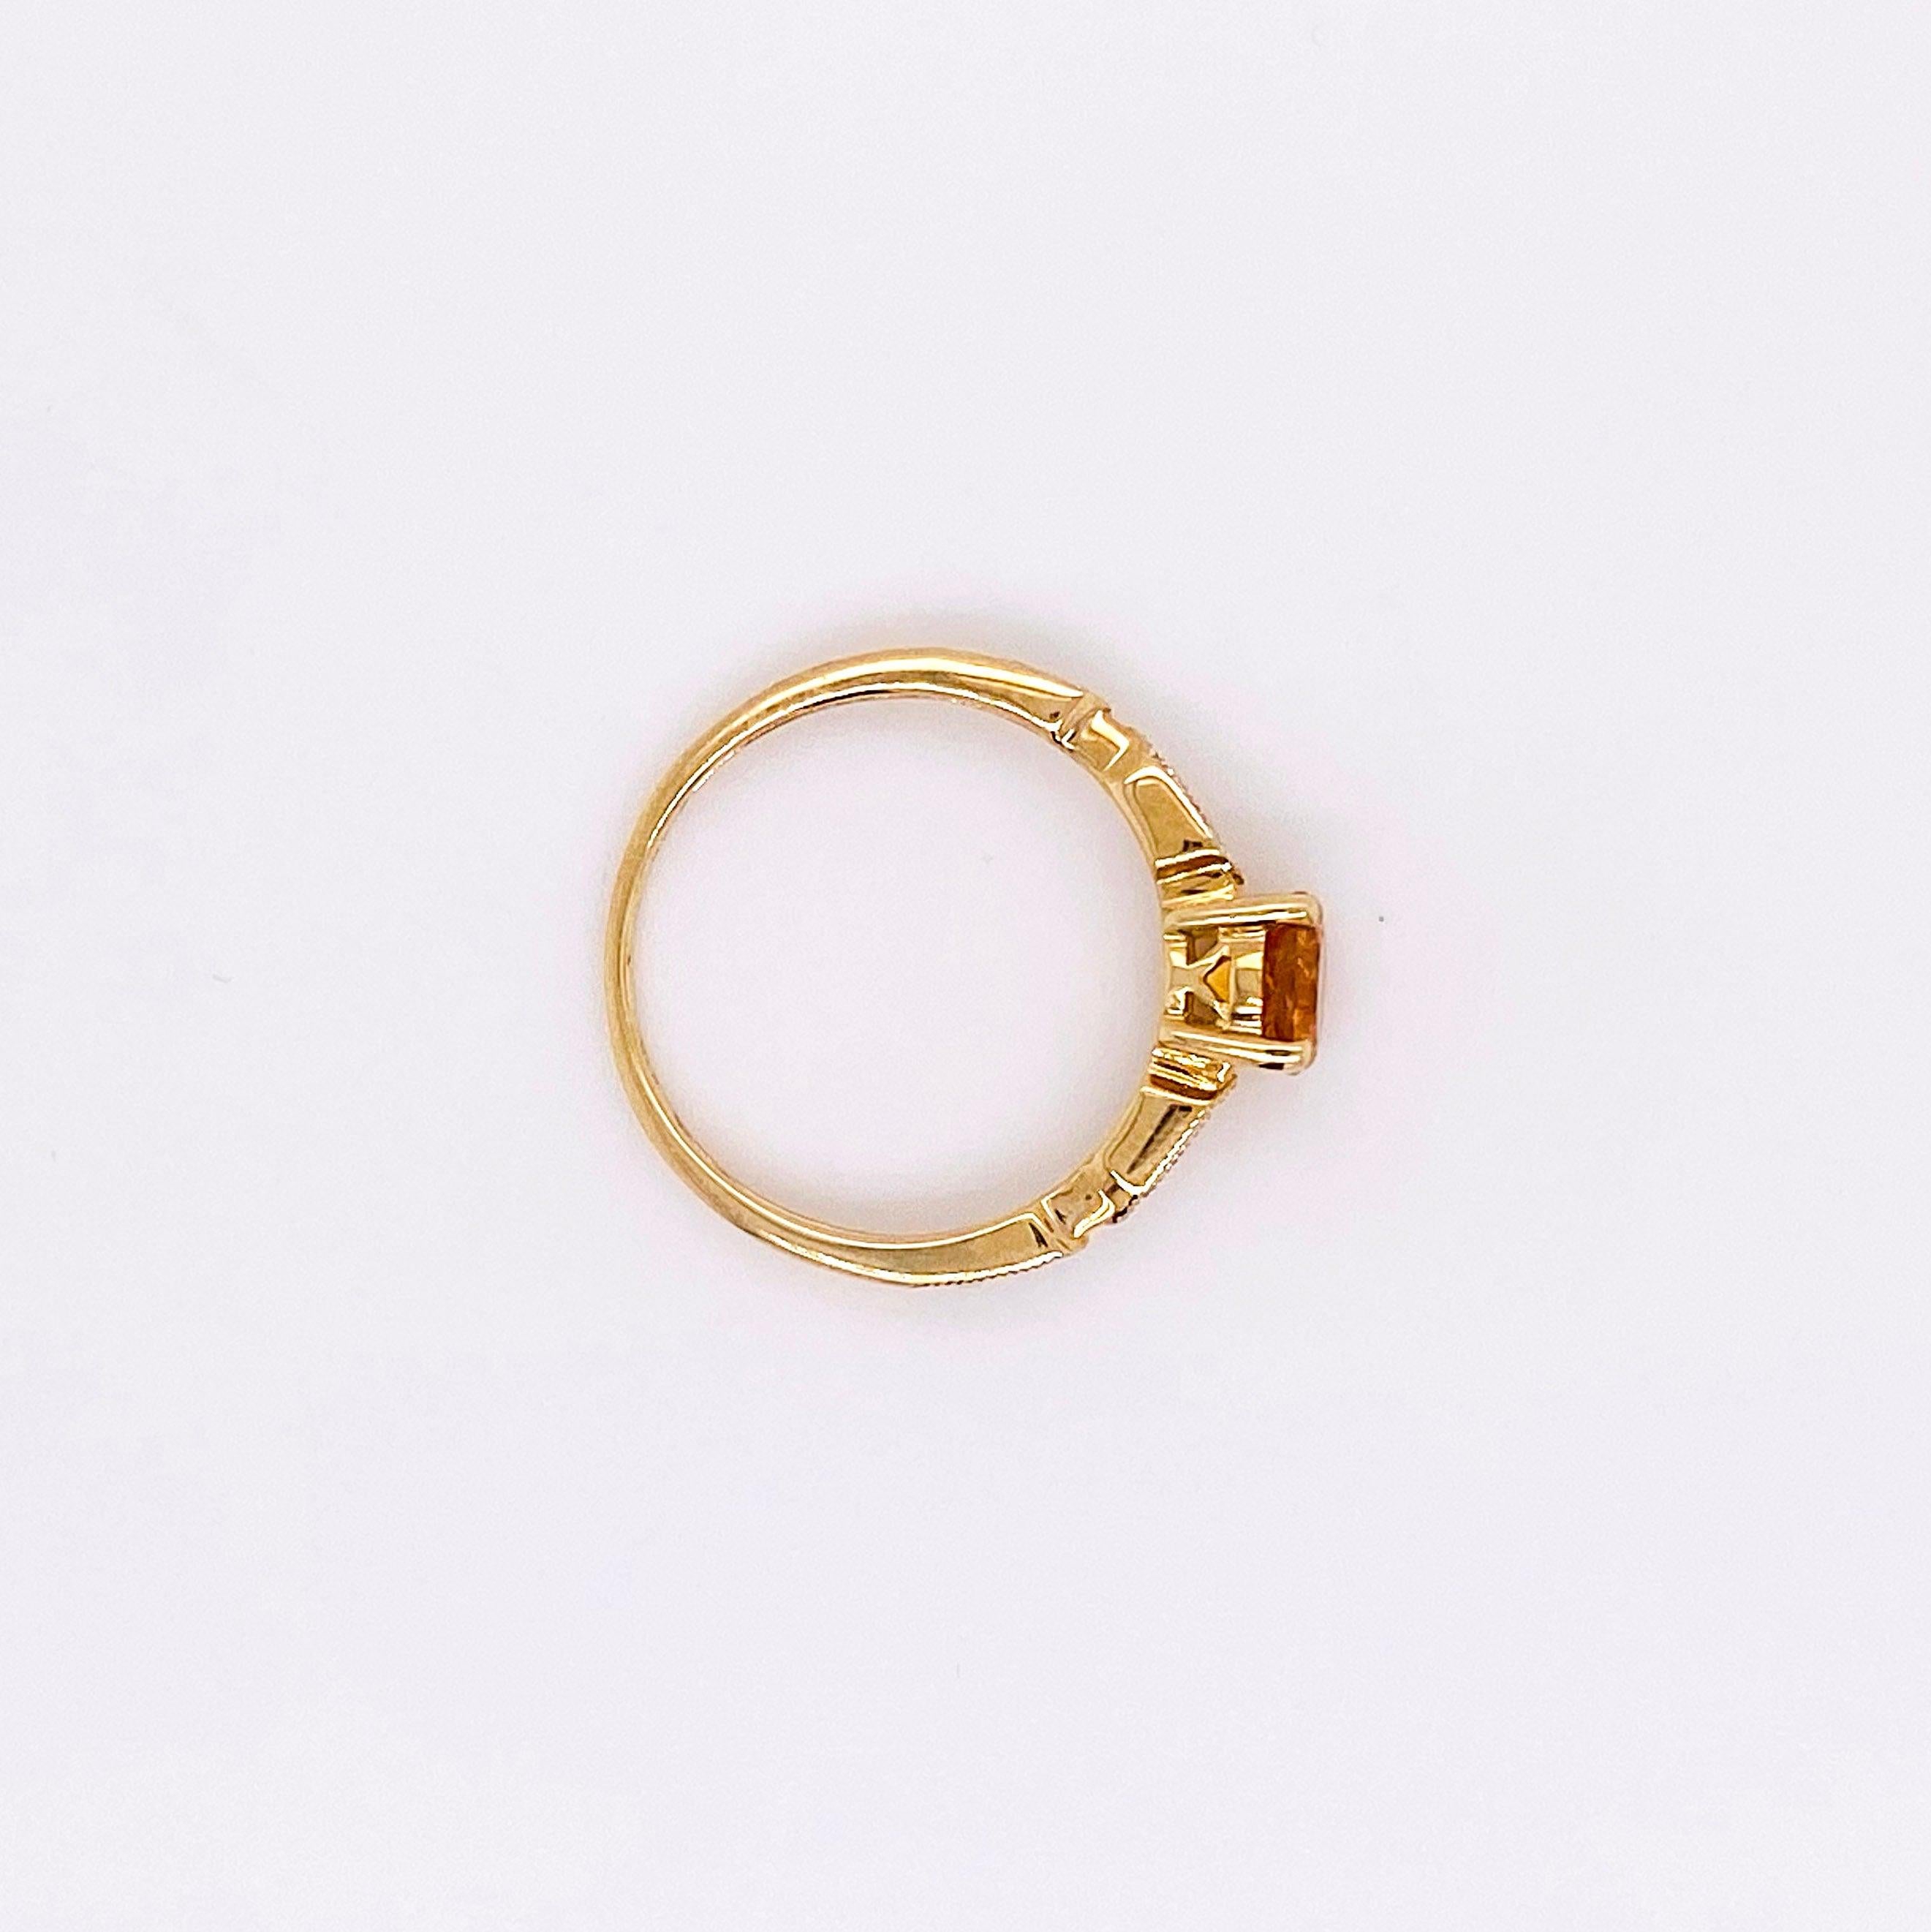 For Sale:  1.00 Carat Citrine and Diamond Ring 14 Karat Yellow Gold Ring November 6